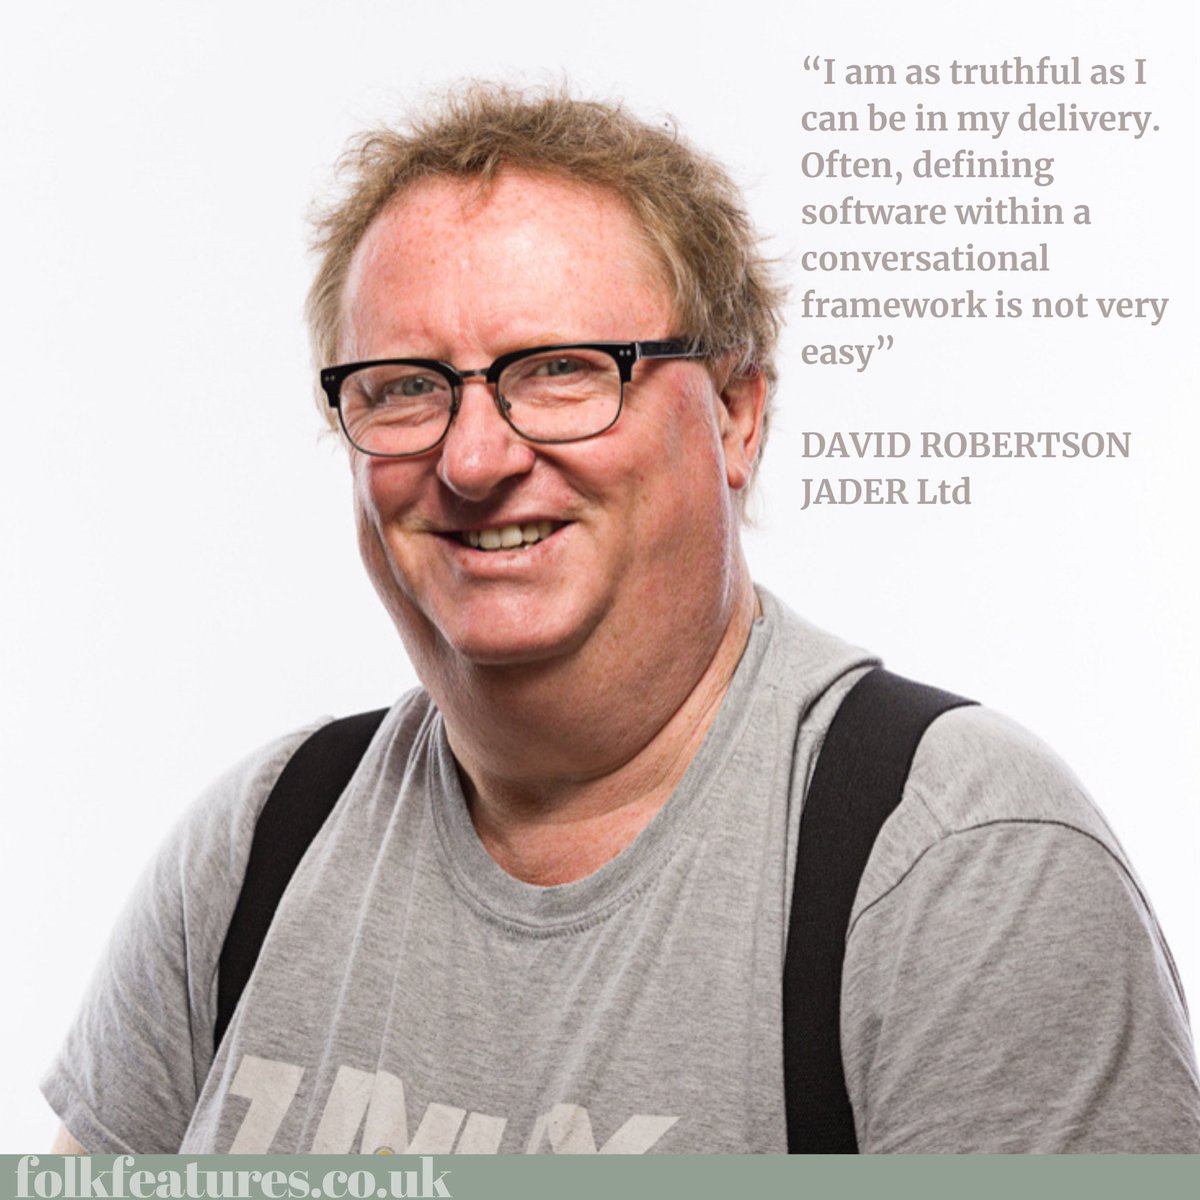 ⭐️ Folk Features’ key partner, computer programmer David Robertson of @David_JaderLtd, on how to communicate coding effectively 

folkfeatures.co.uk/how-to-communi…

#folkfeatures